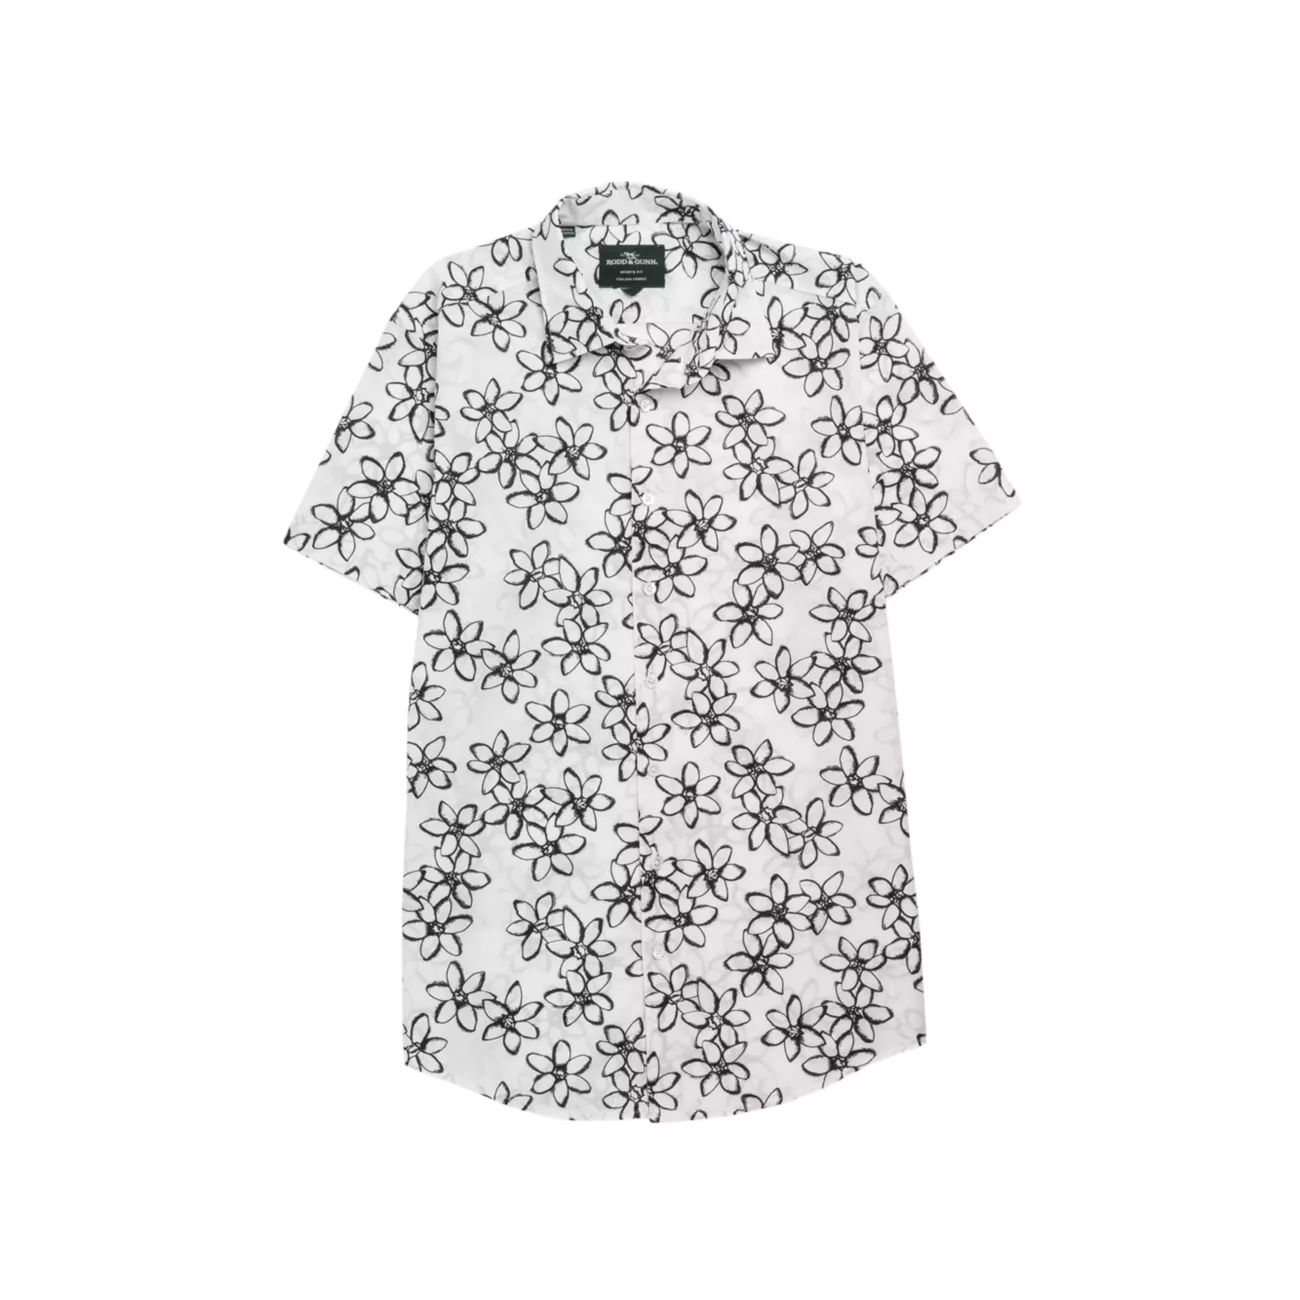 Wingrove Floral Cotton Slim-Fit Shirt RODD AND GUNN